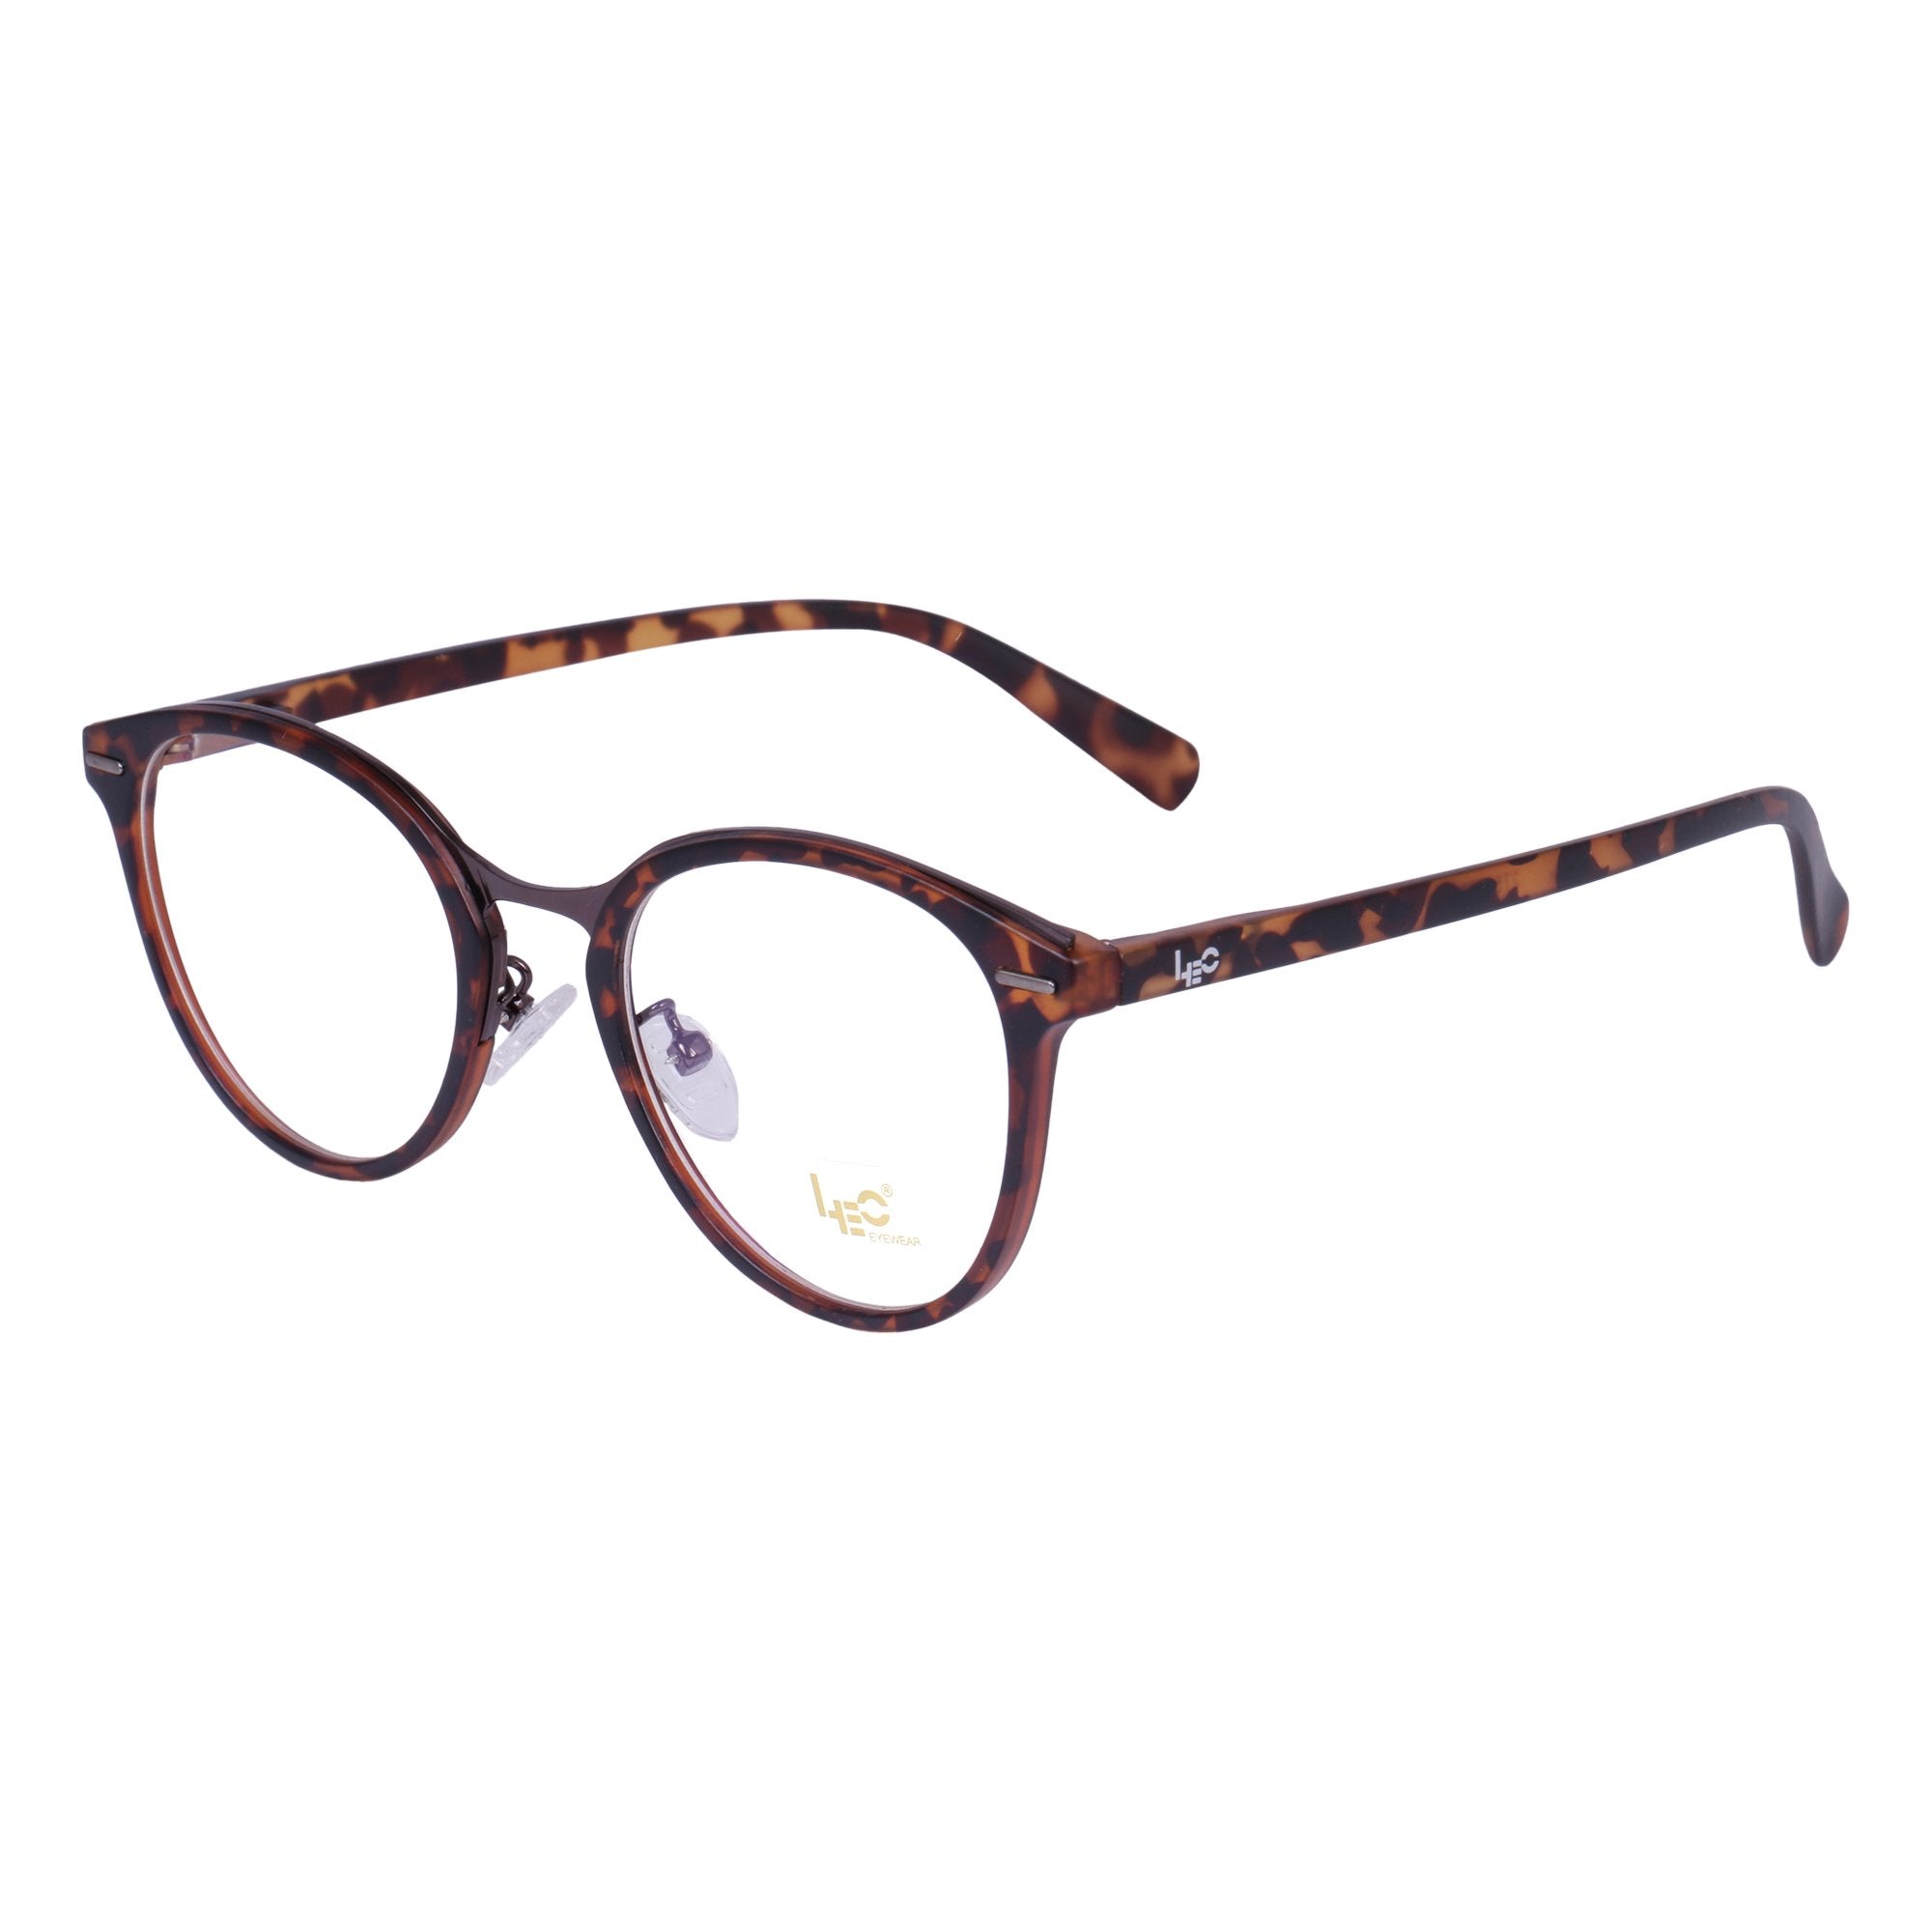 TORTOISE Cateye Rimmed Eyeglasses - L2758